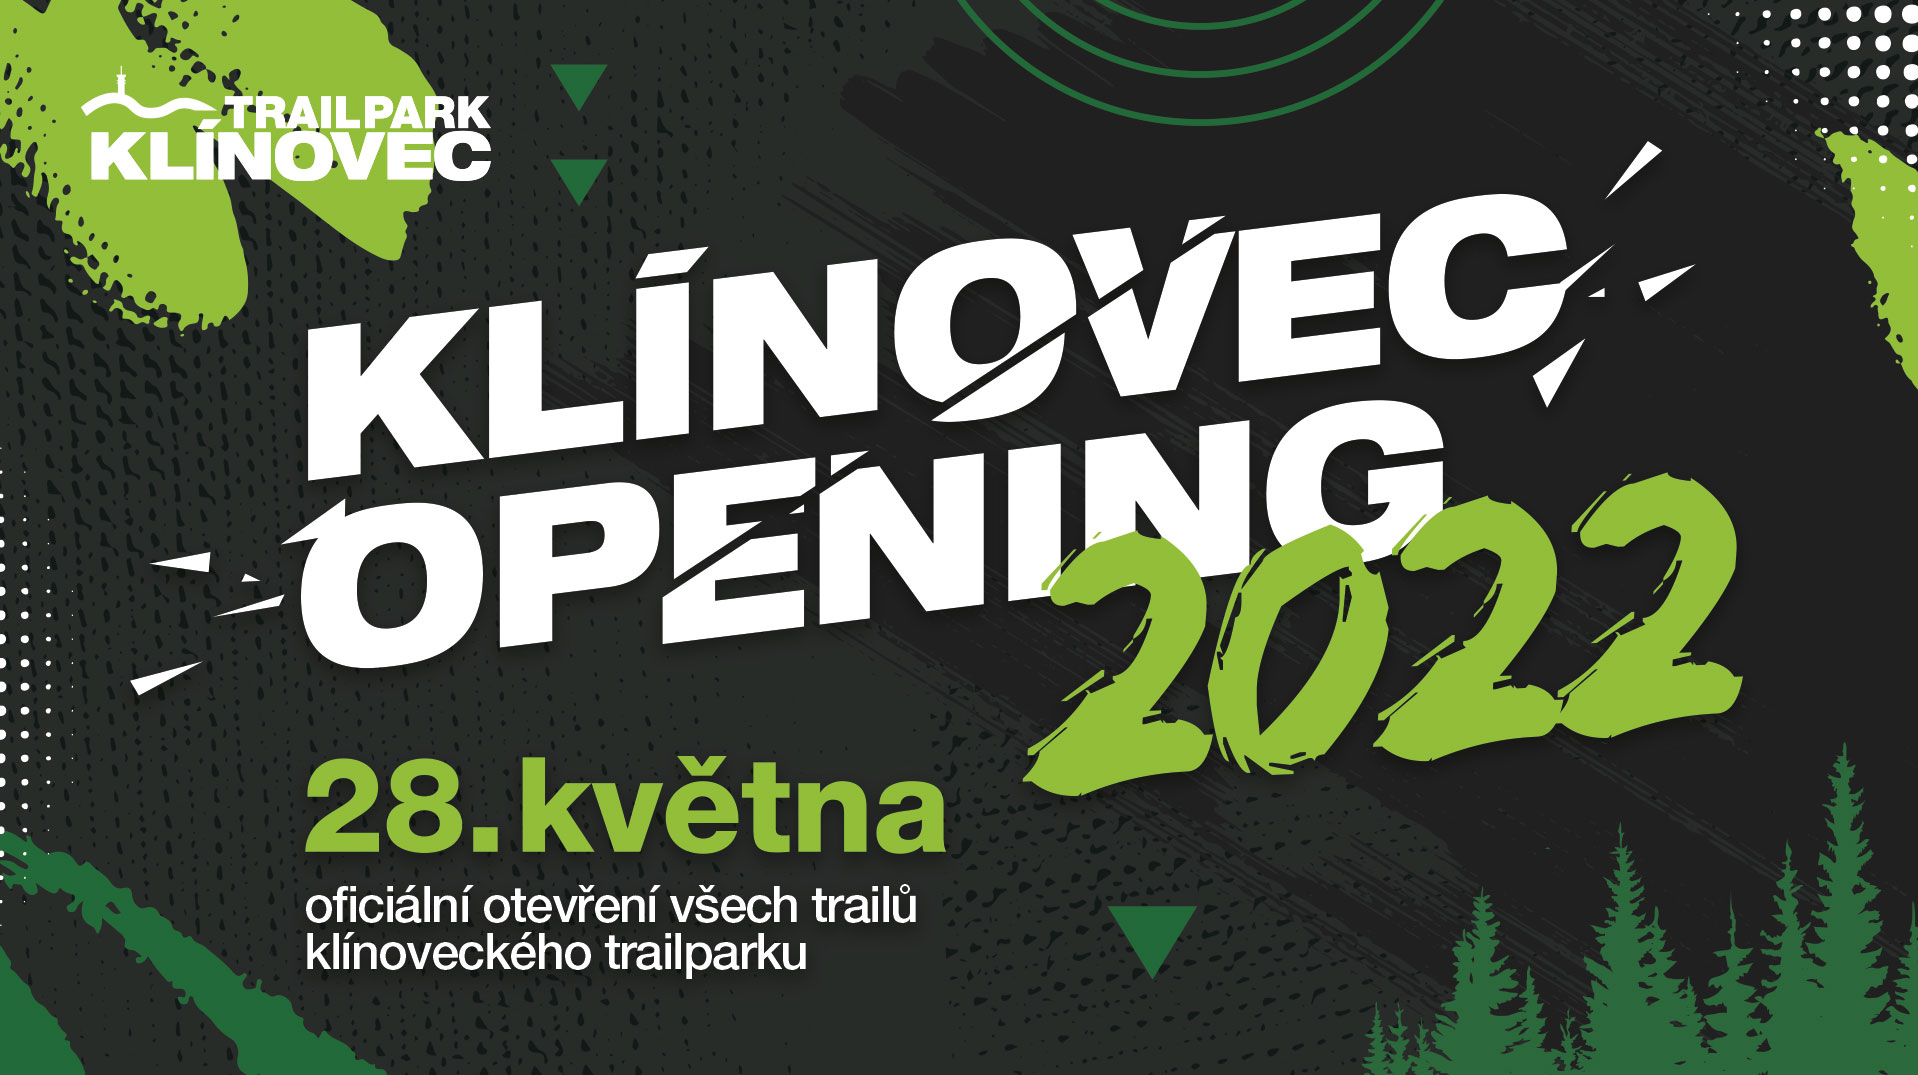 Klínovec opening 2022